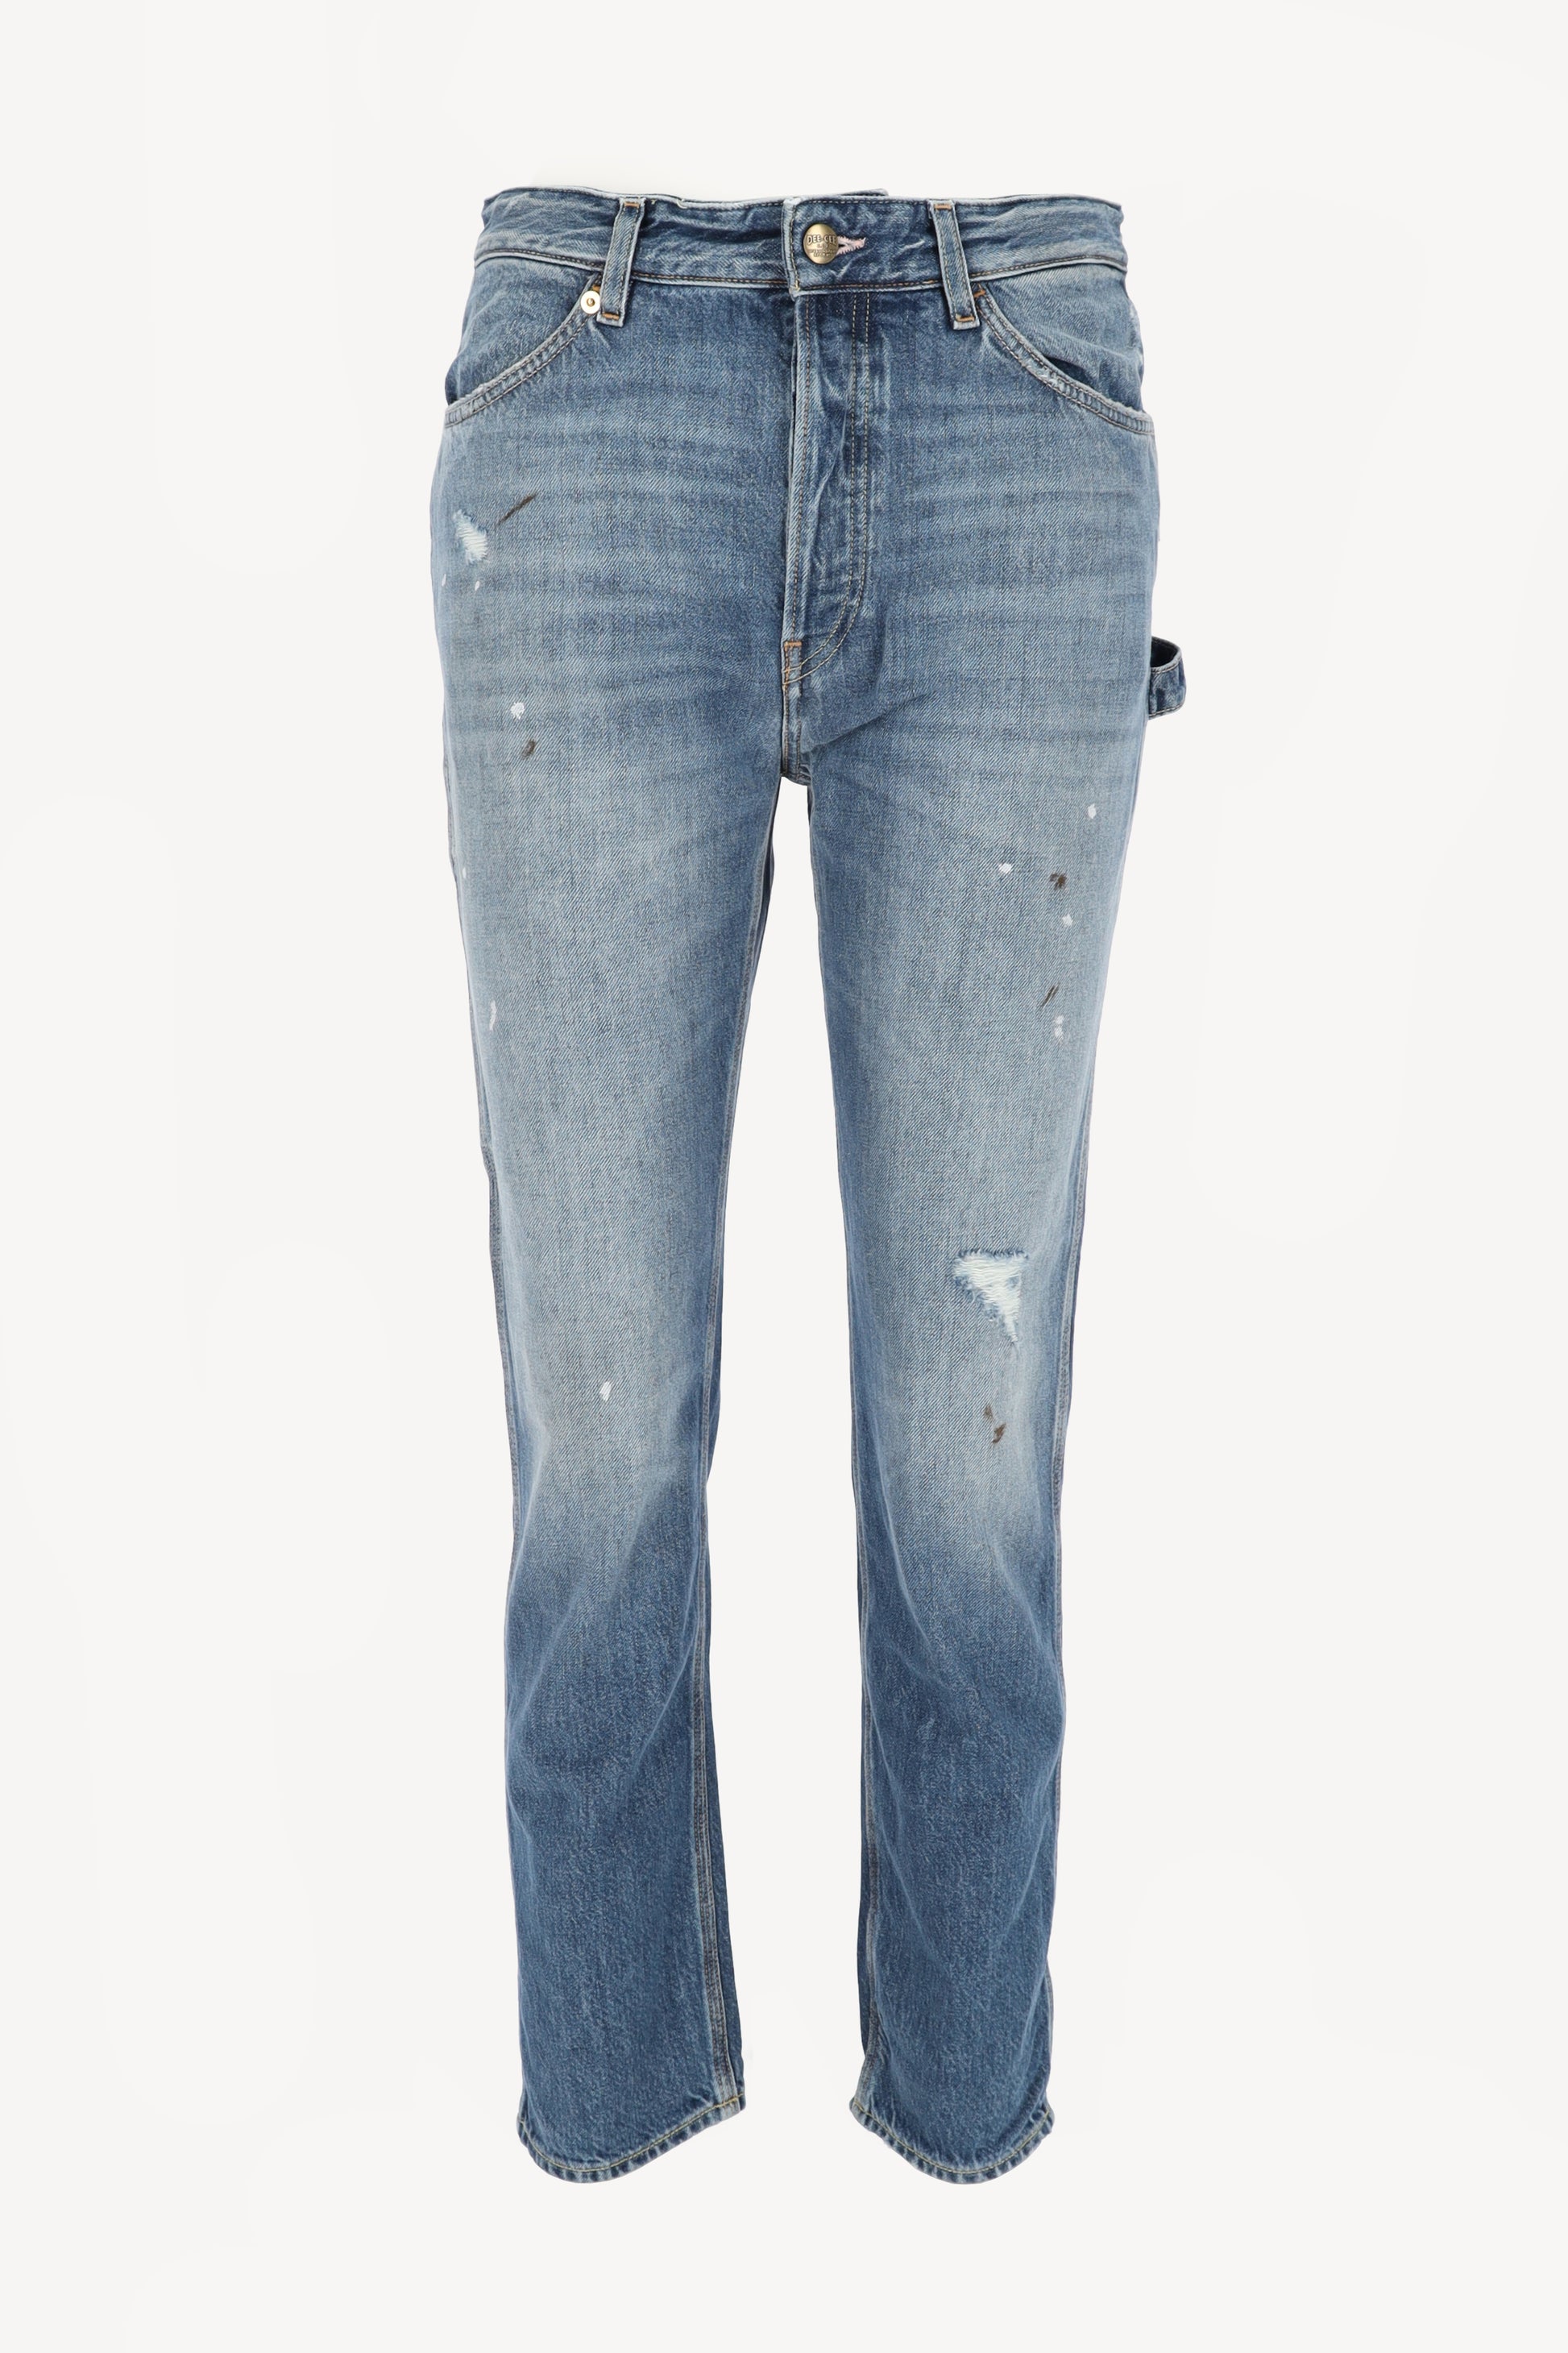 Jeans Cropped in Farmer Light BlueWashington Dee Cee - Anita Hass